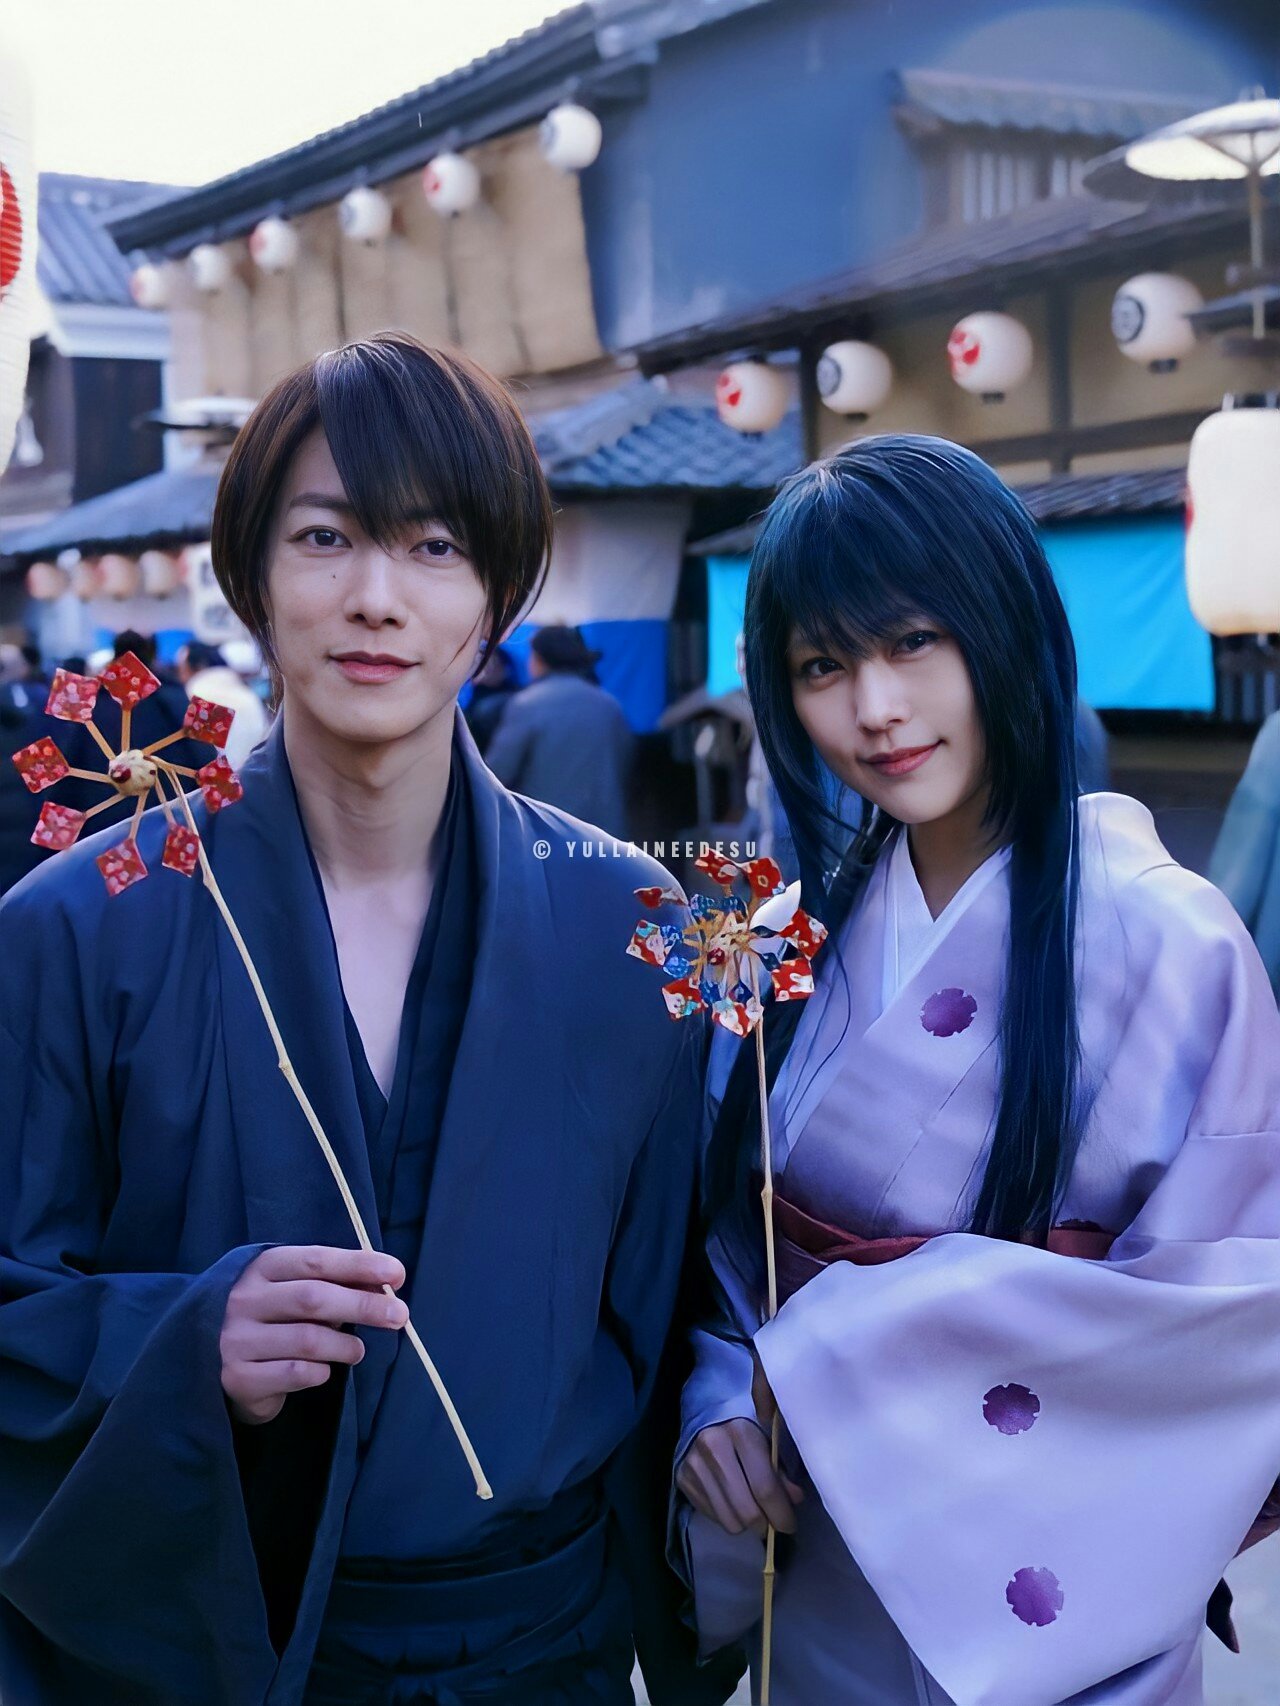 Rurouni Kenshin: The Beginning will stream on Netflix from 30 July